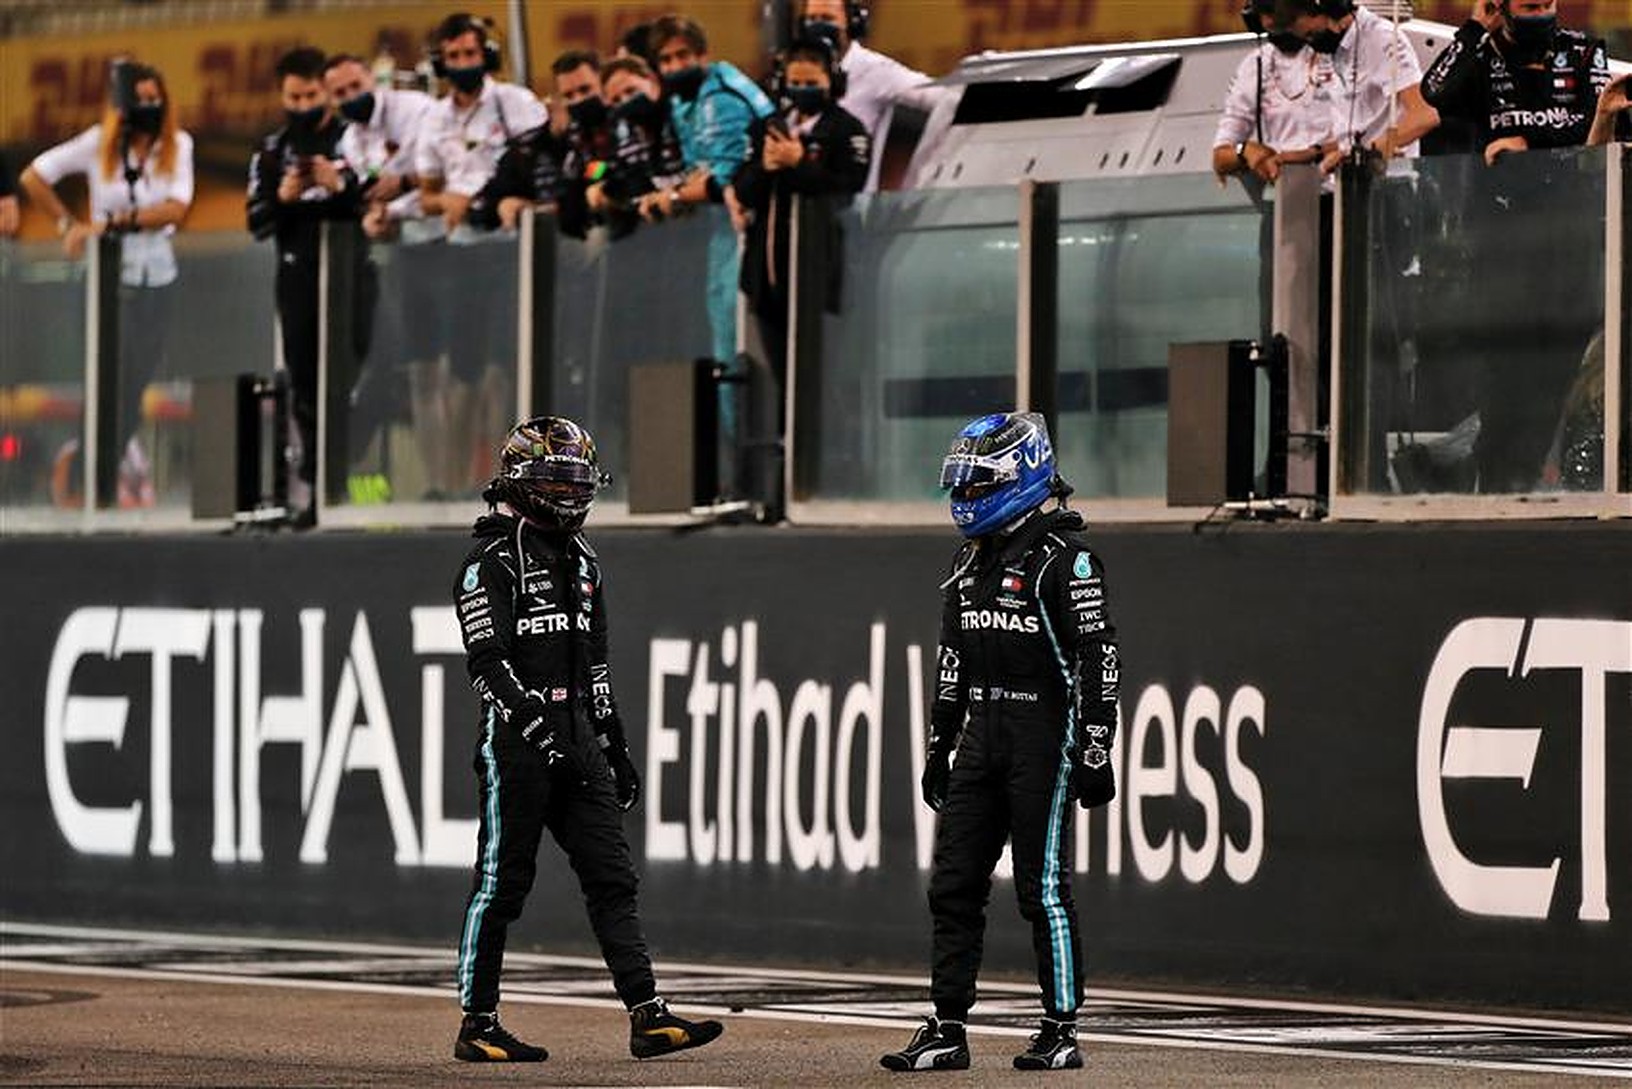 Lewis Hamilton and Valtteri Bottas Mercedes F1 2020 season finale - Formula1news.co.uk